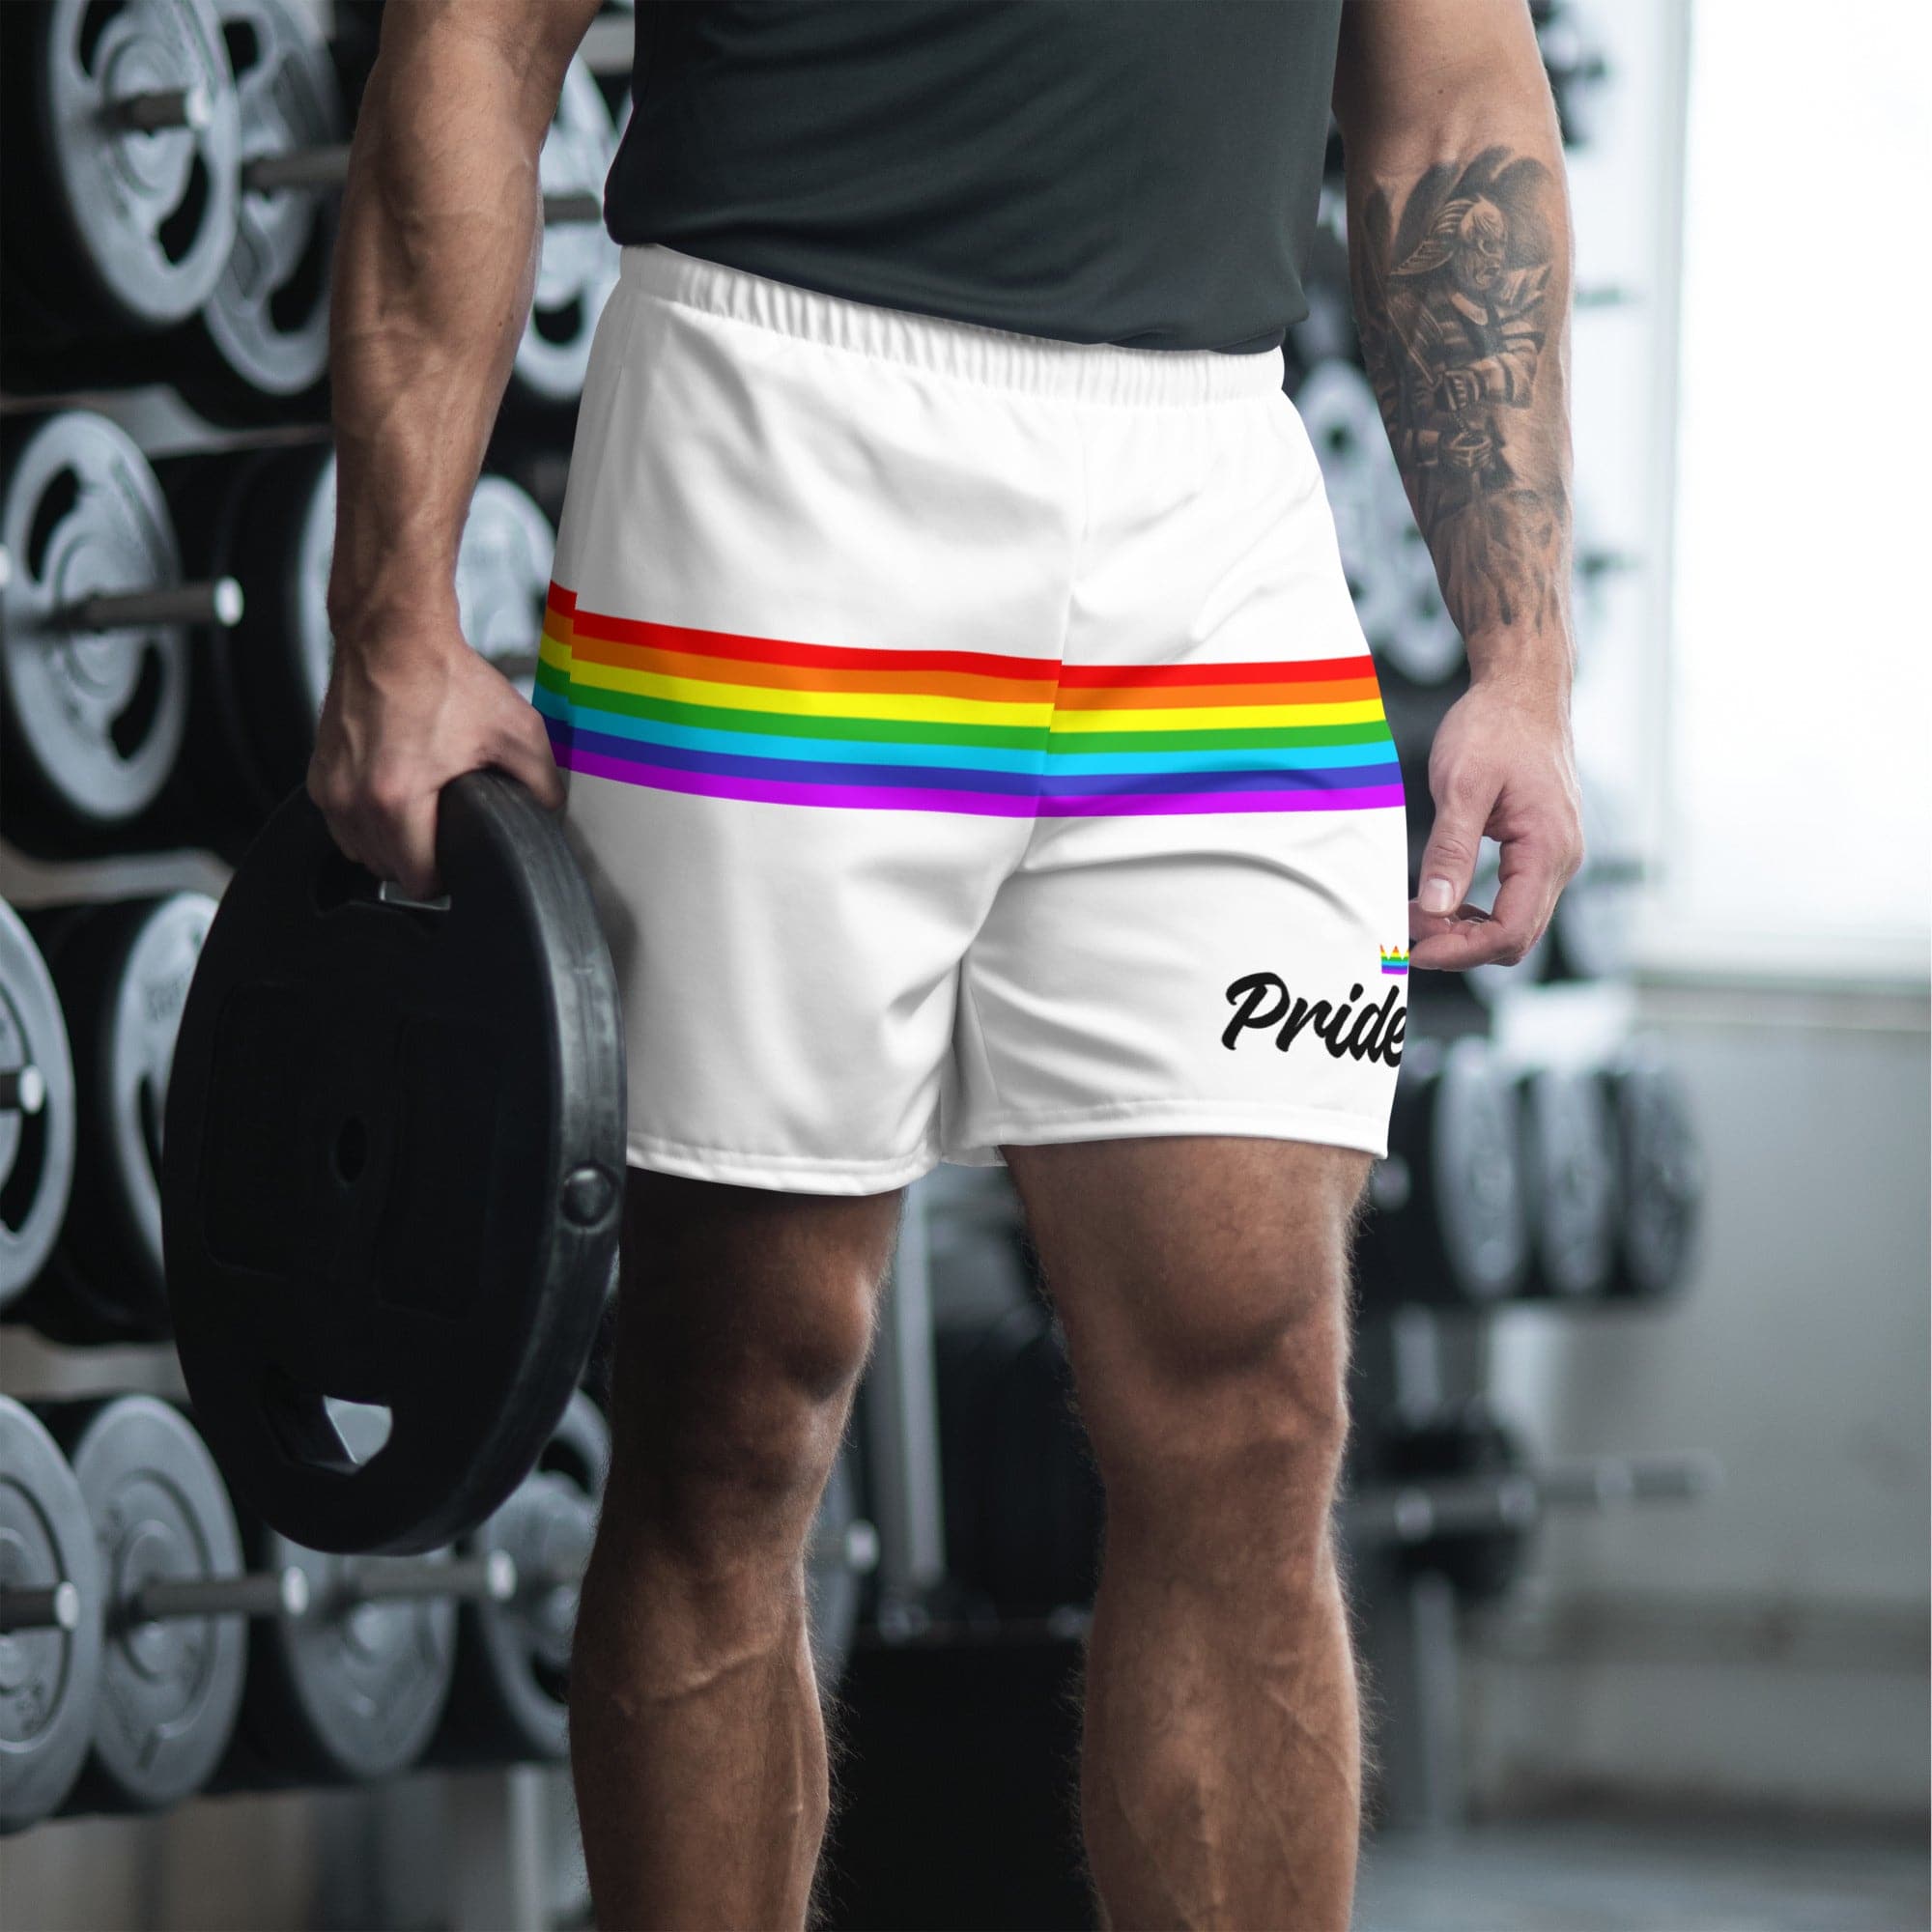 Rainbow Stripe Pride Shorts in White